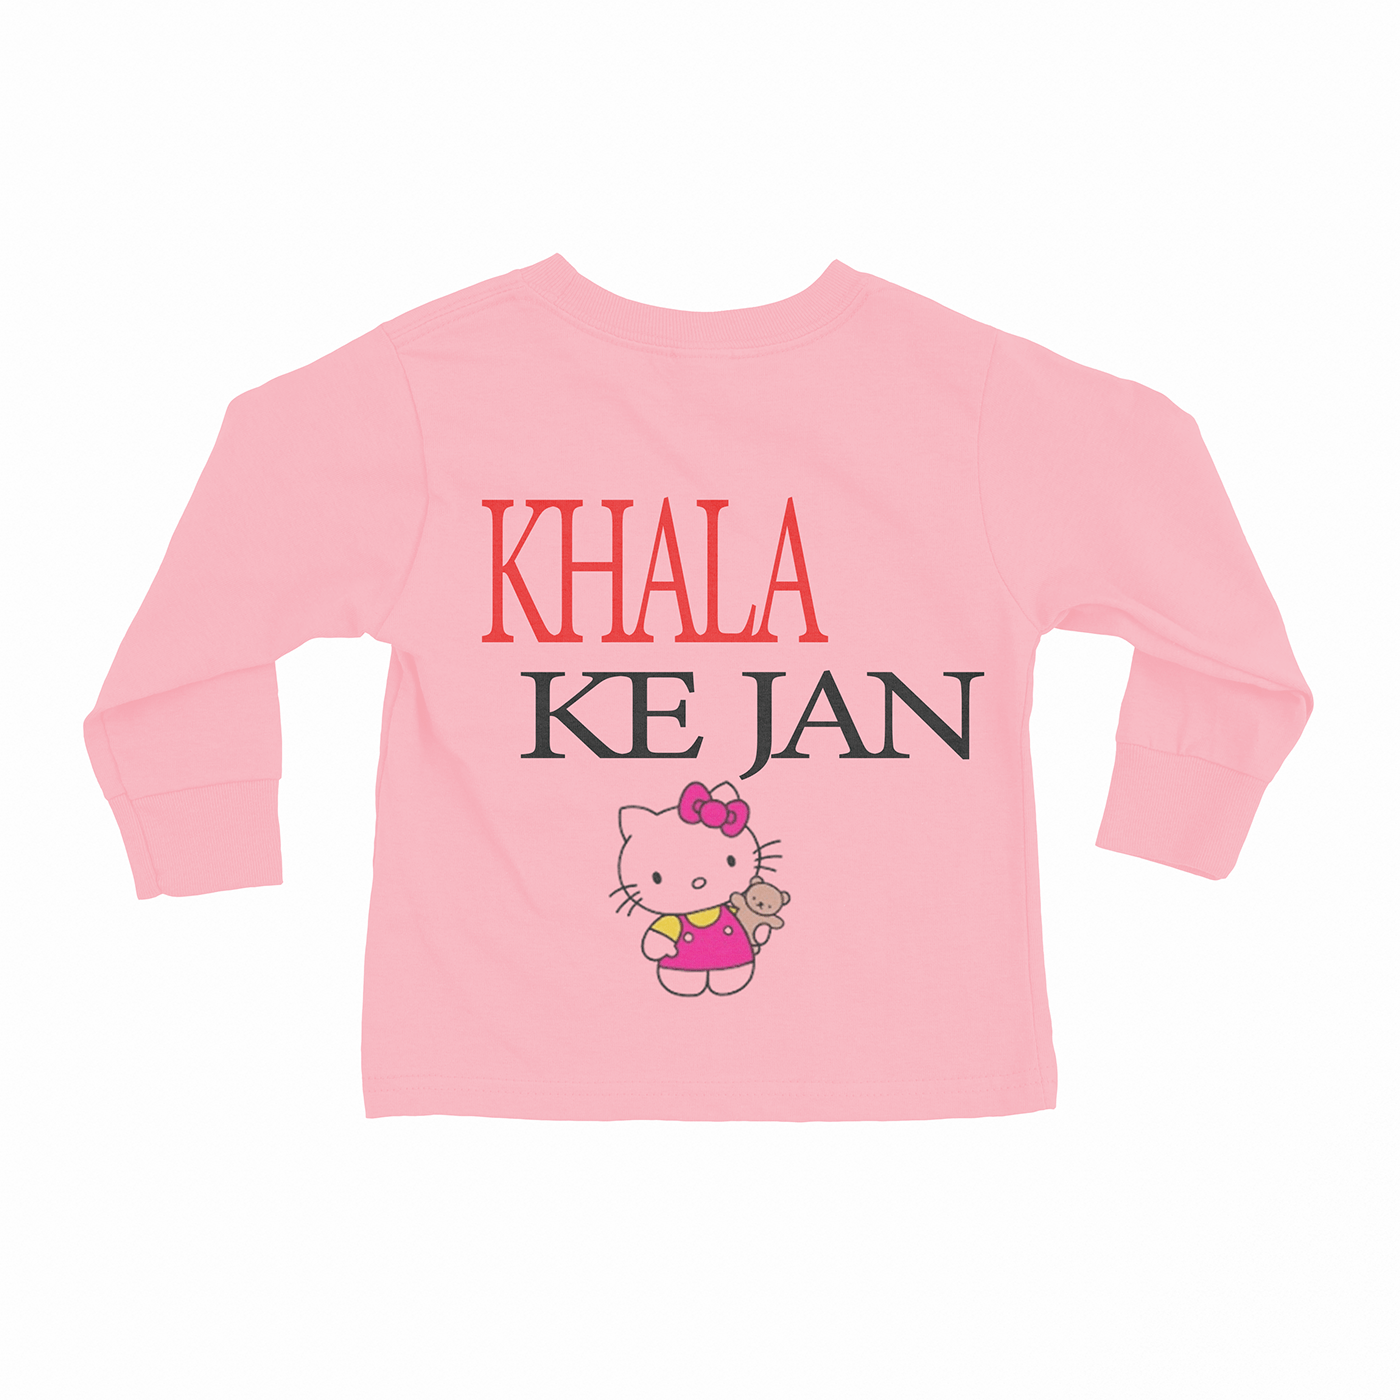 "Khala ke jan ❤️" 🌟 Cute baby tee design!